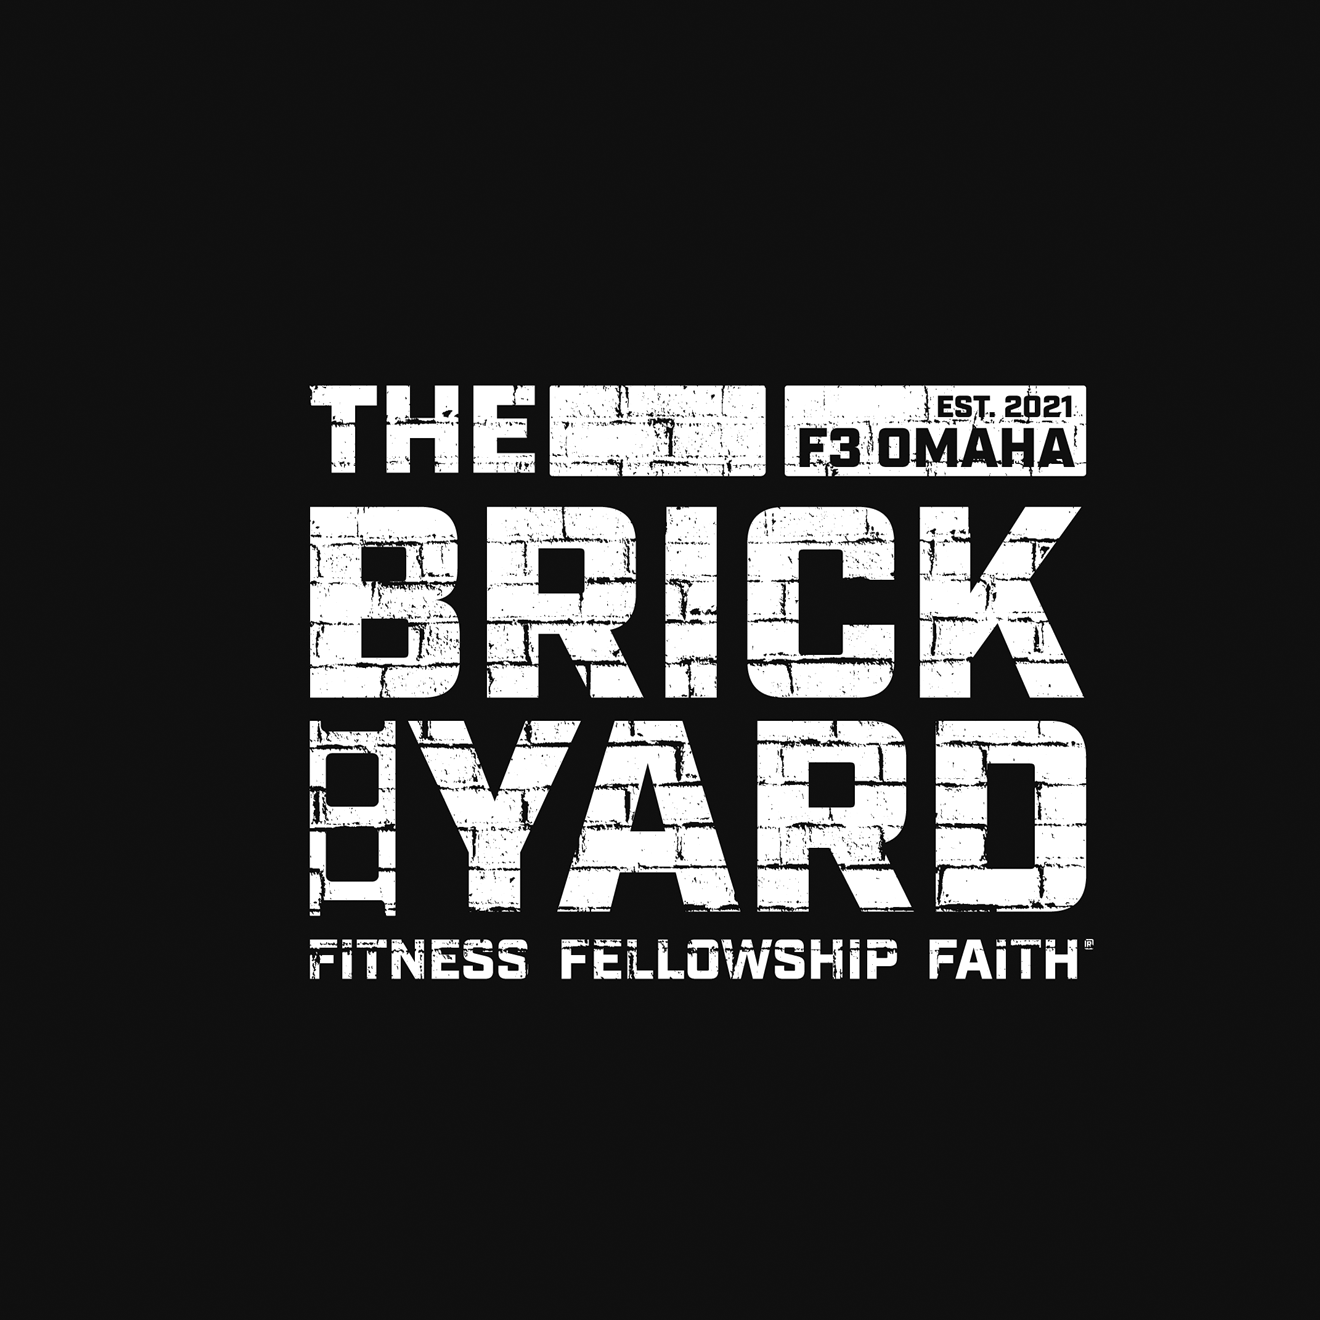 F3 Omaha The Brickyard  Pre-Order November 2021